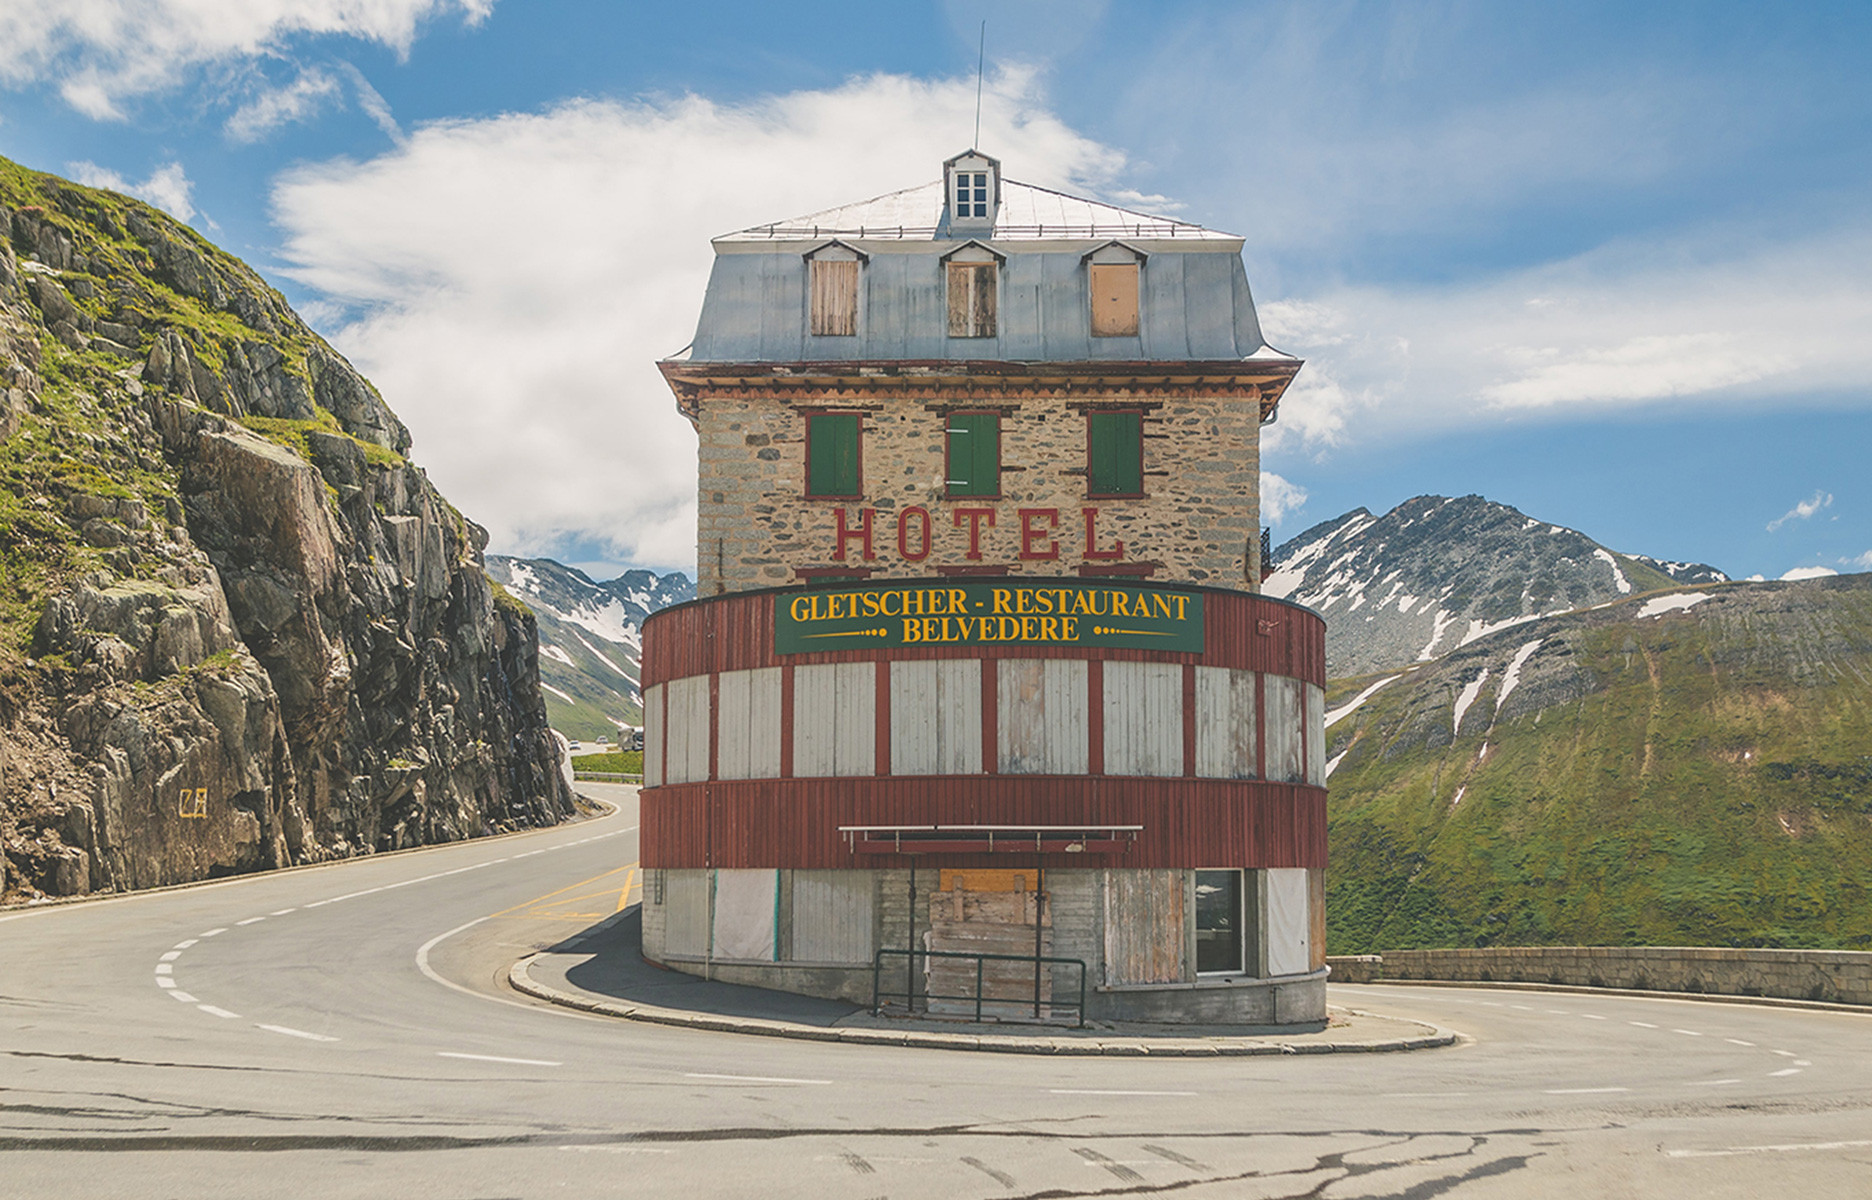 James Bond 007 montagne ski cinéma lieux tournage - the good life